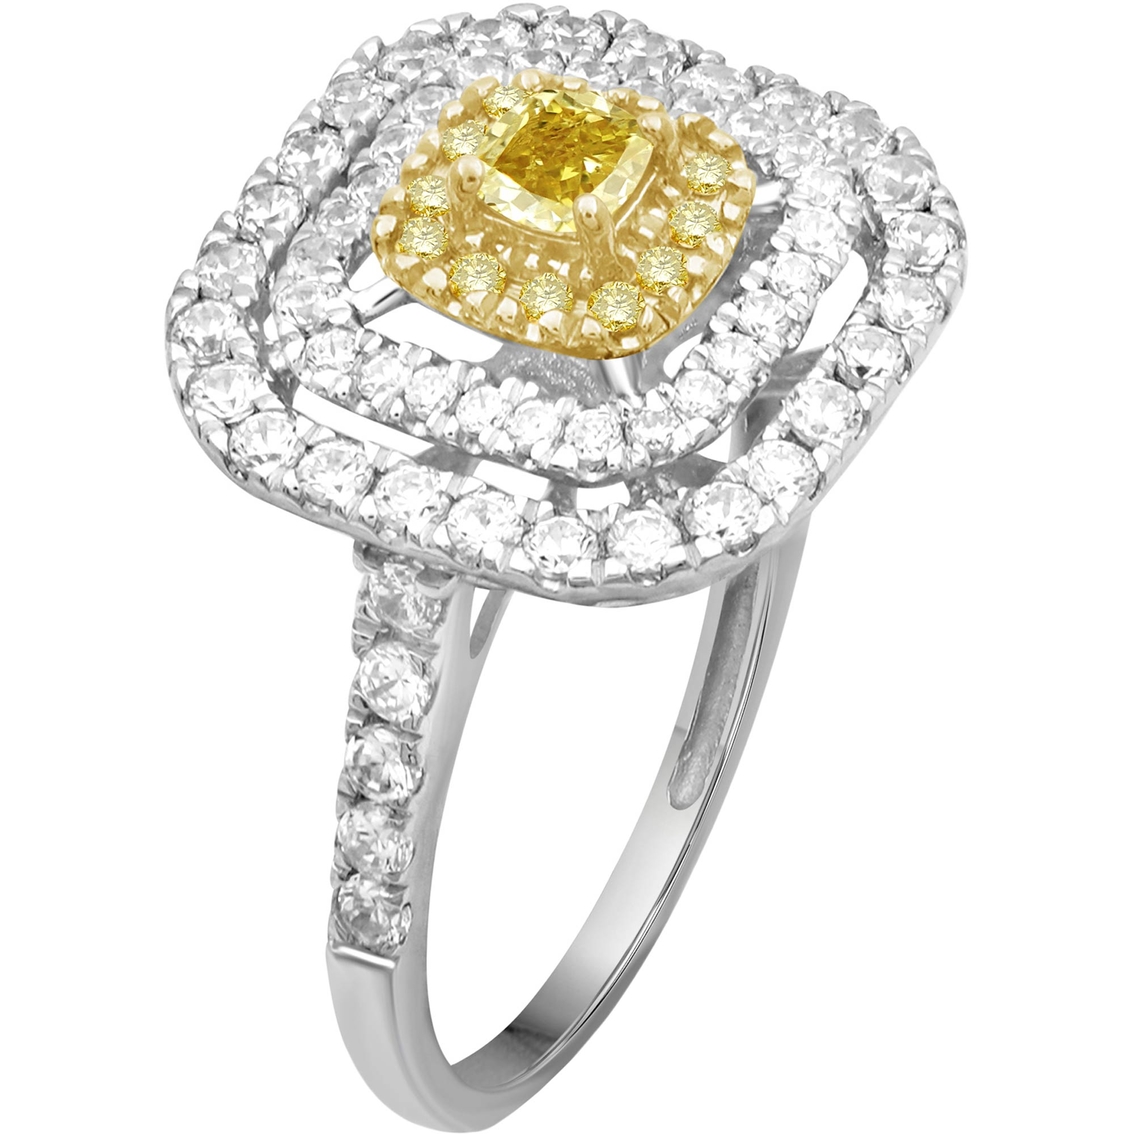 She Shines 14K Gold 1 1/4 CTW White and Enhanced Yellow Diamond Engagement Ring - Image 2 of 4